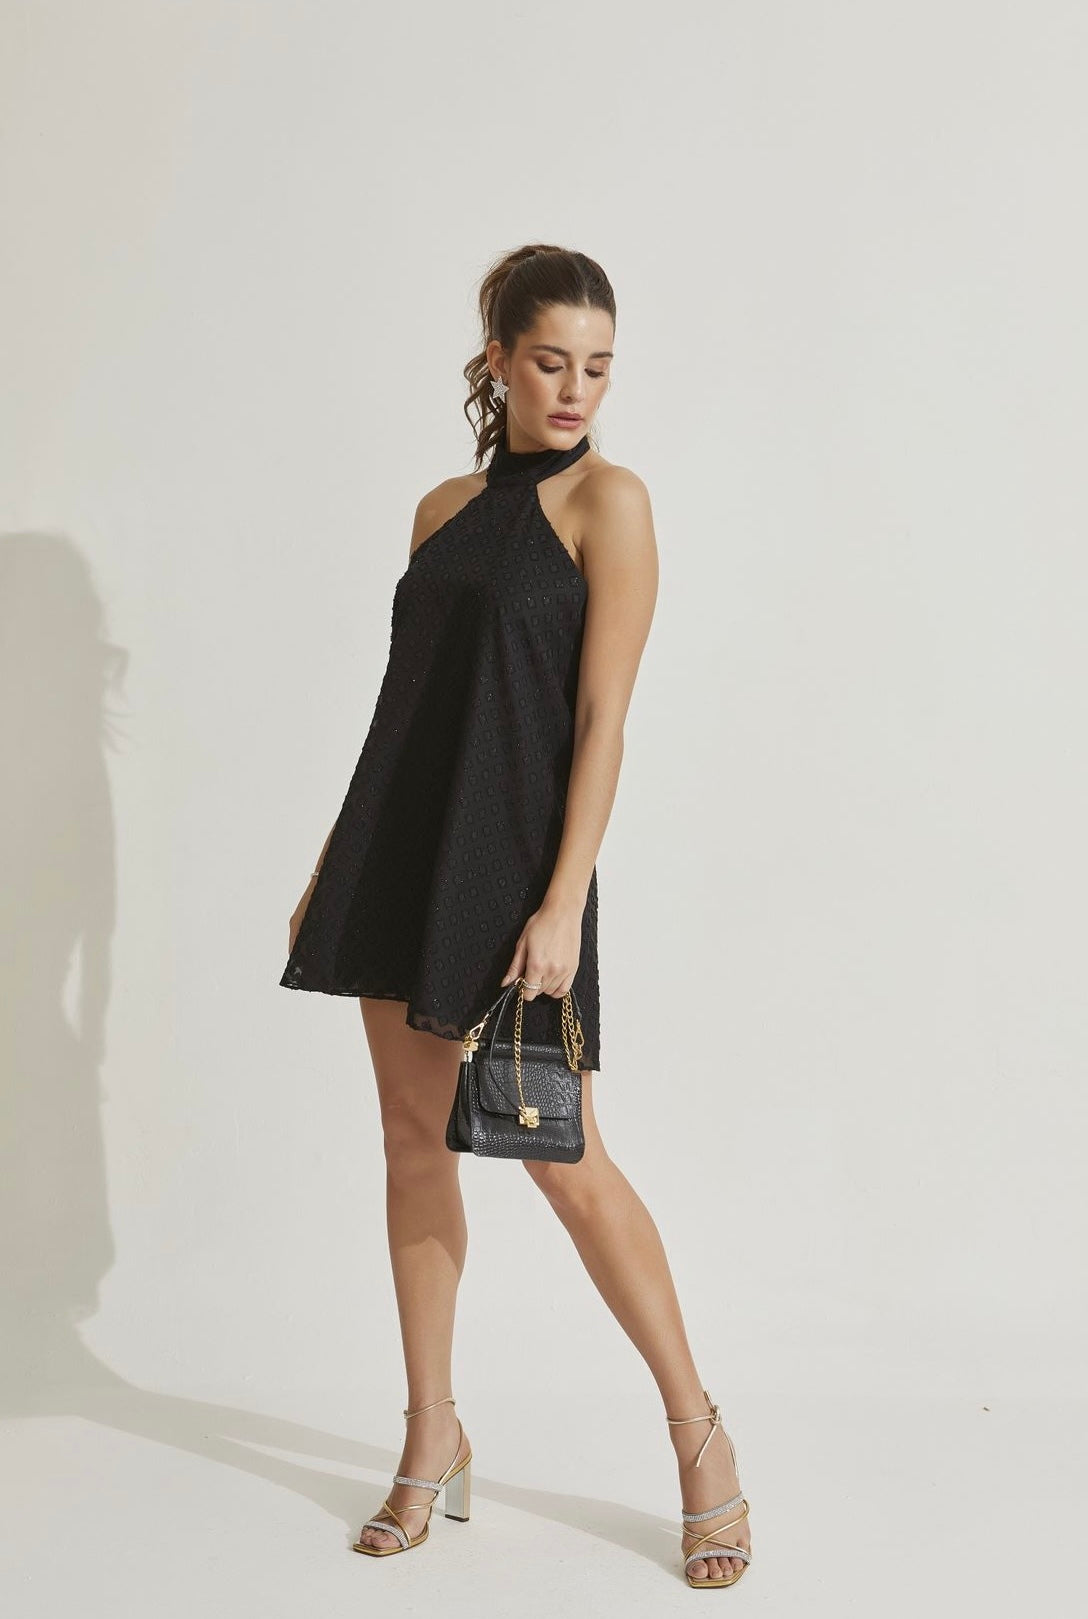 MN Chiffon Black Dress - Rio Brazilian Boutique